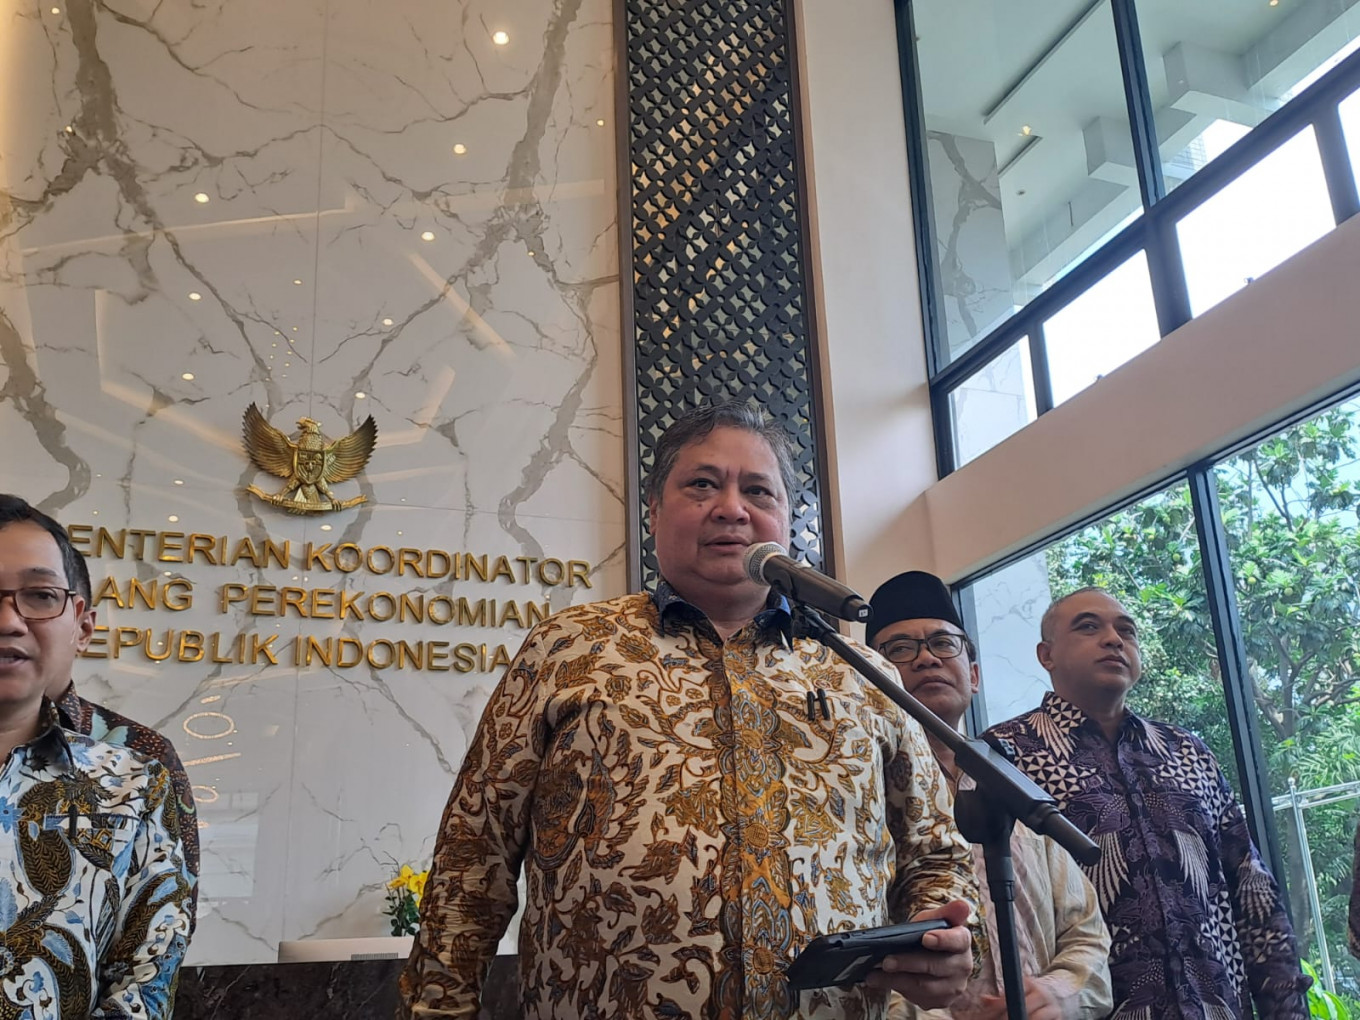 Airlangga Hartarto Accuses Neighbors of Sabotaging Indonesia’s Semiconductor Industry Development